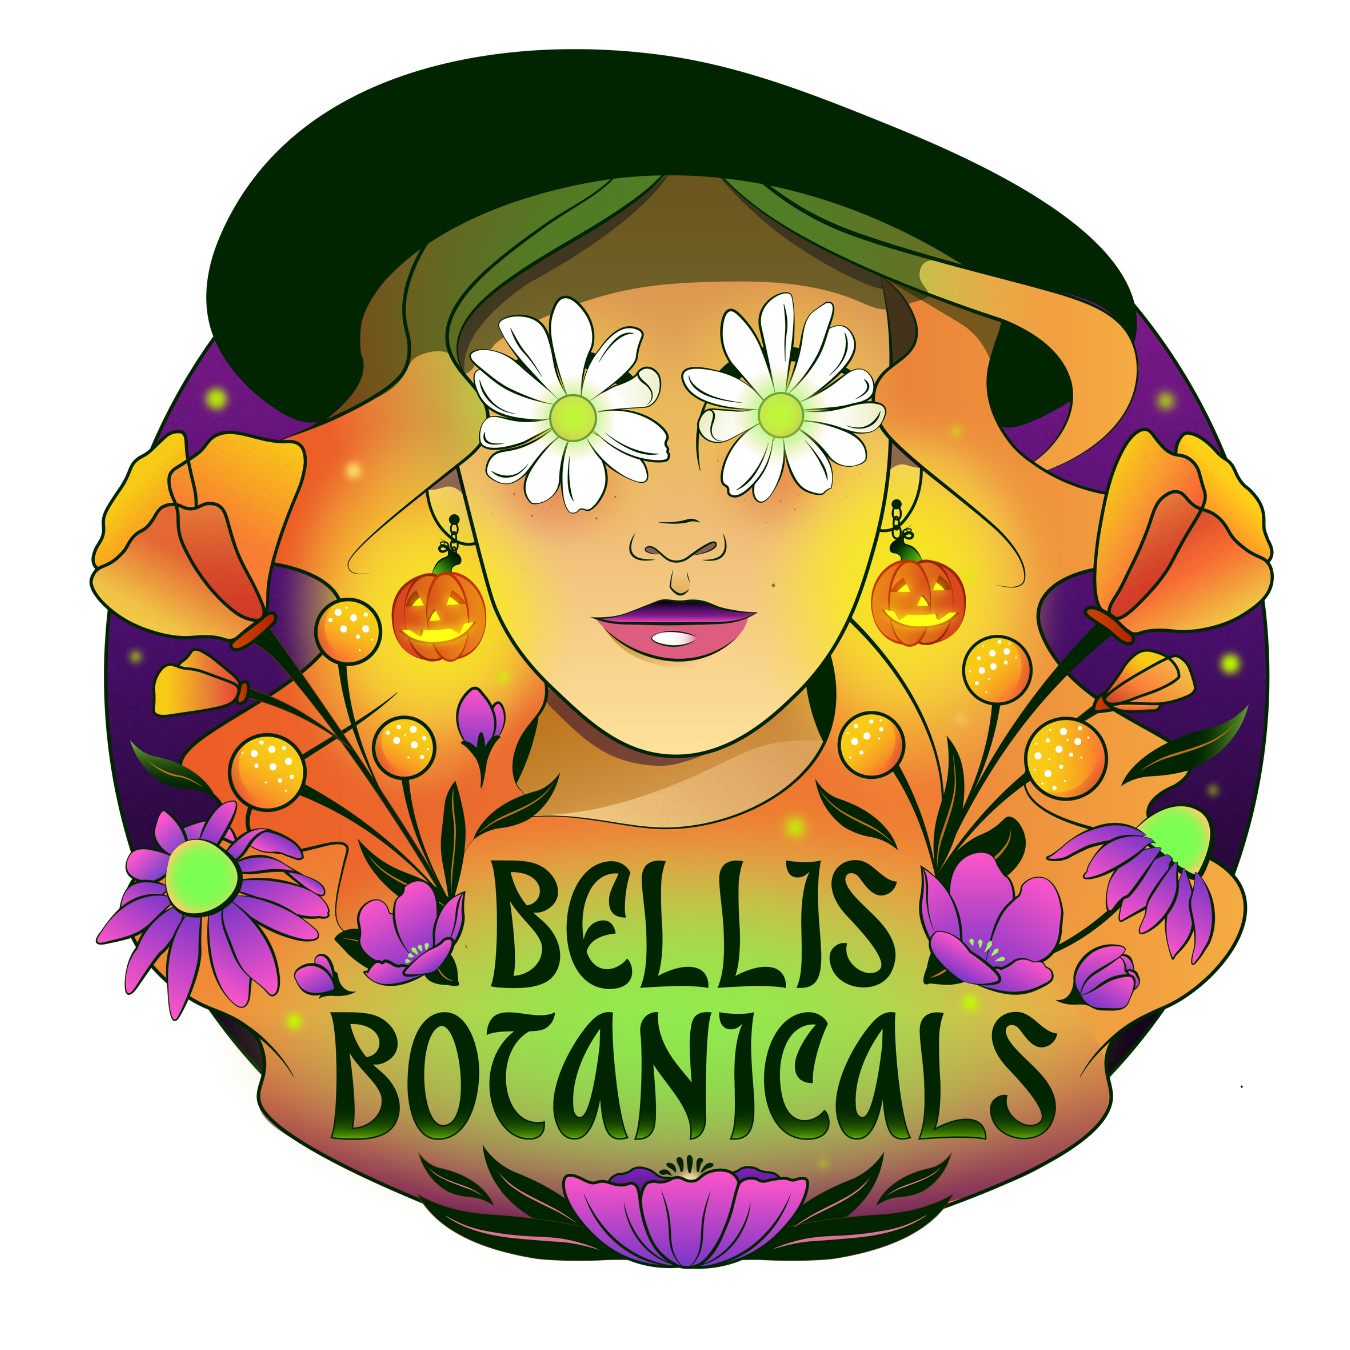 Bellis Botanicals